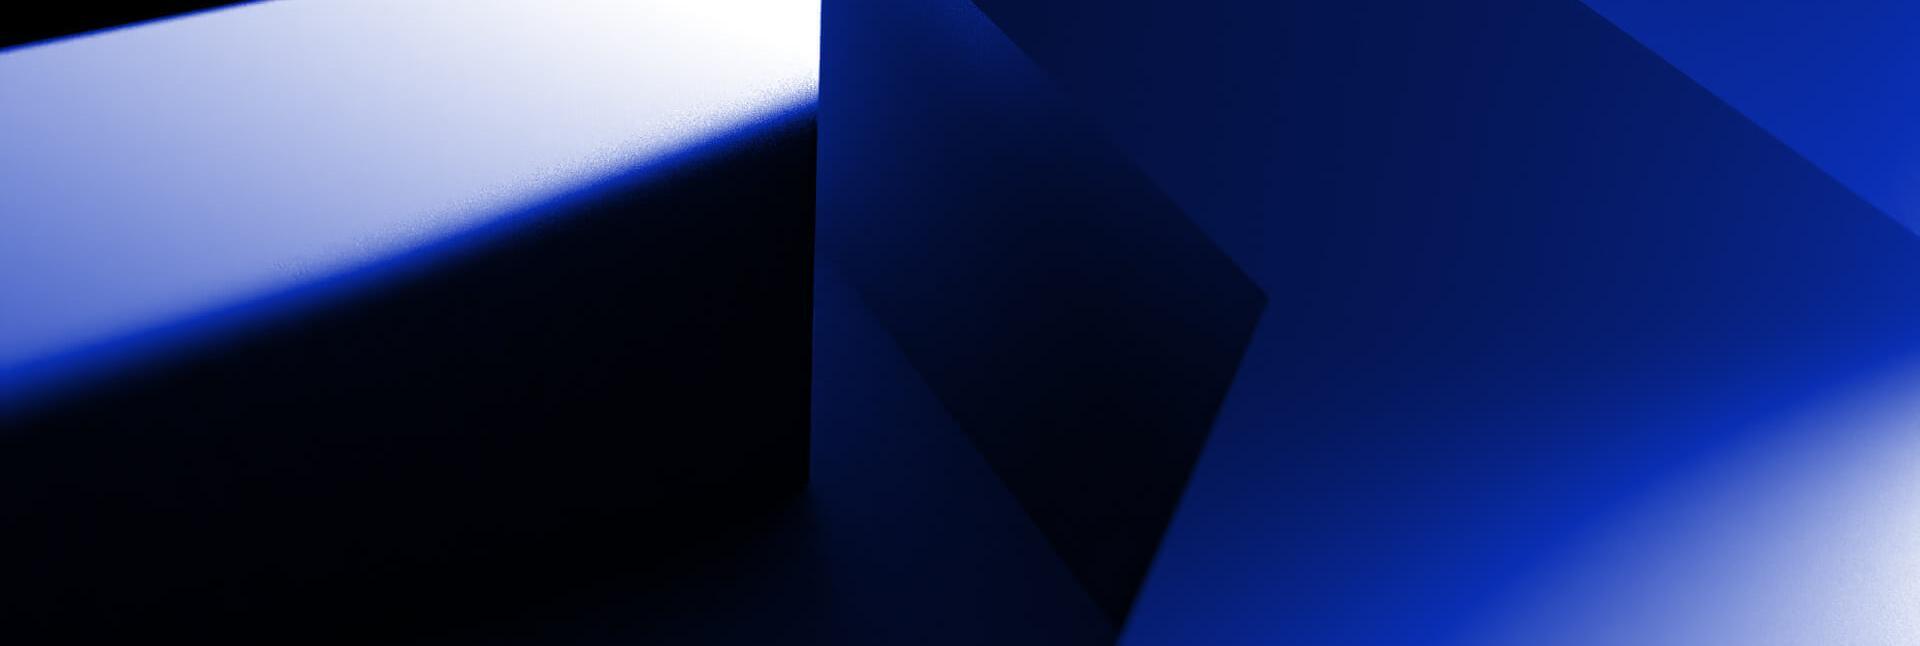 rra-background-blue-6-2021.jpg